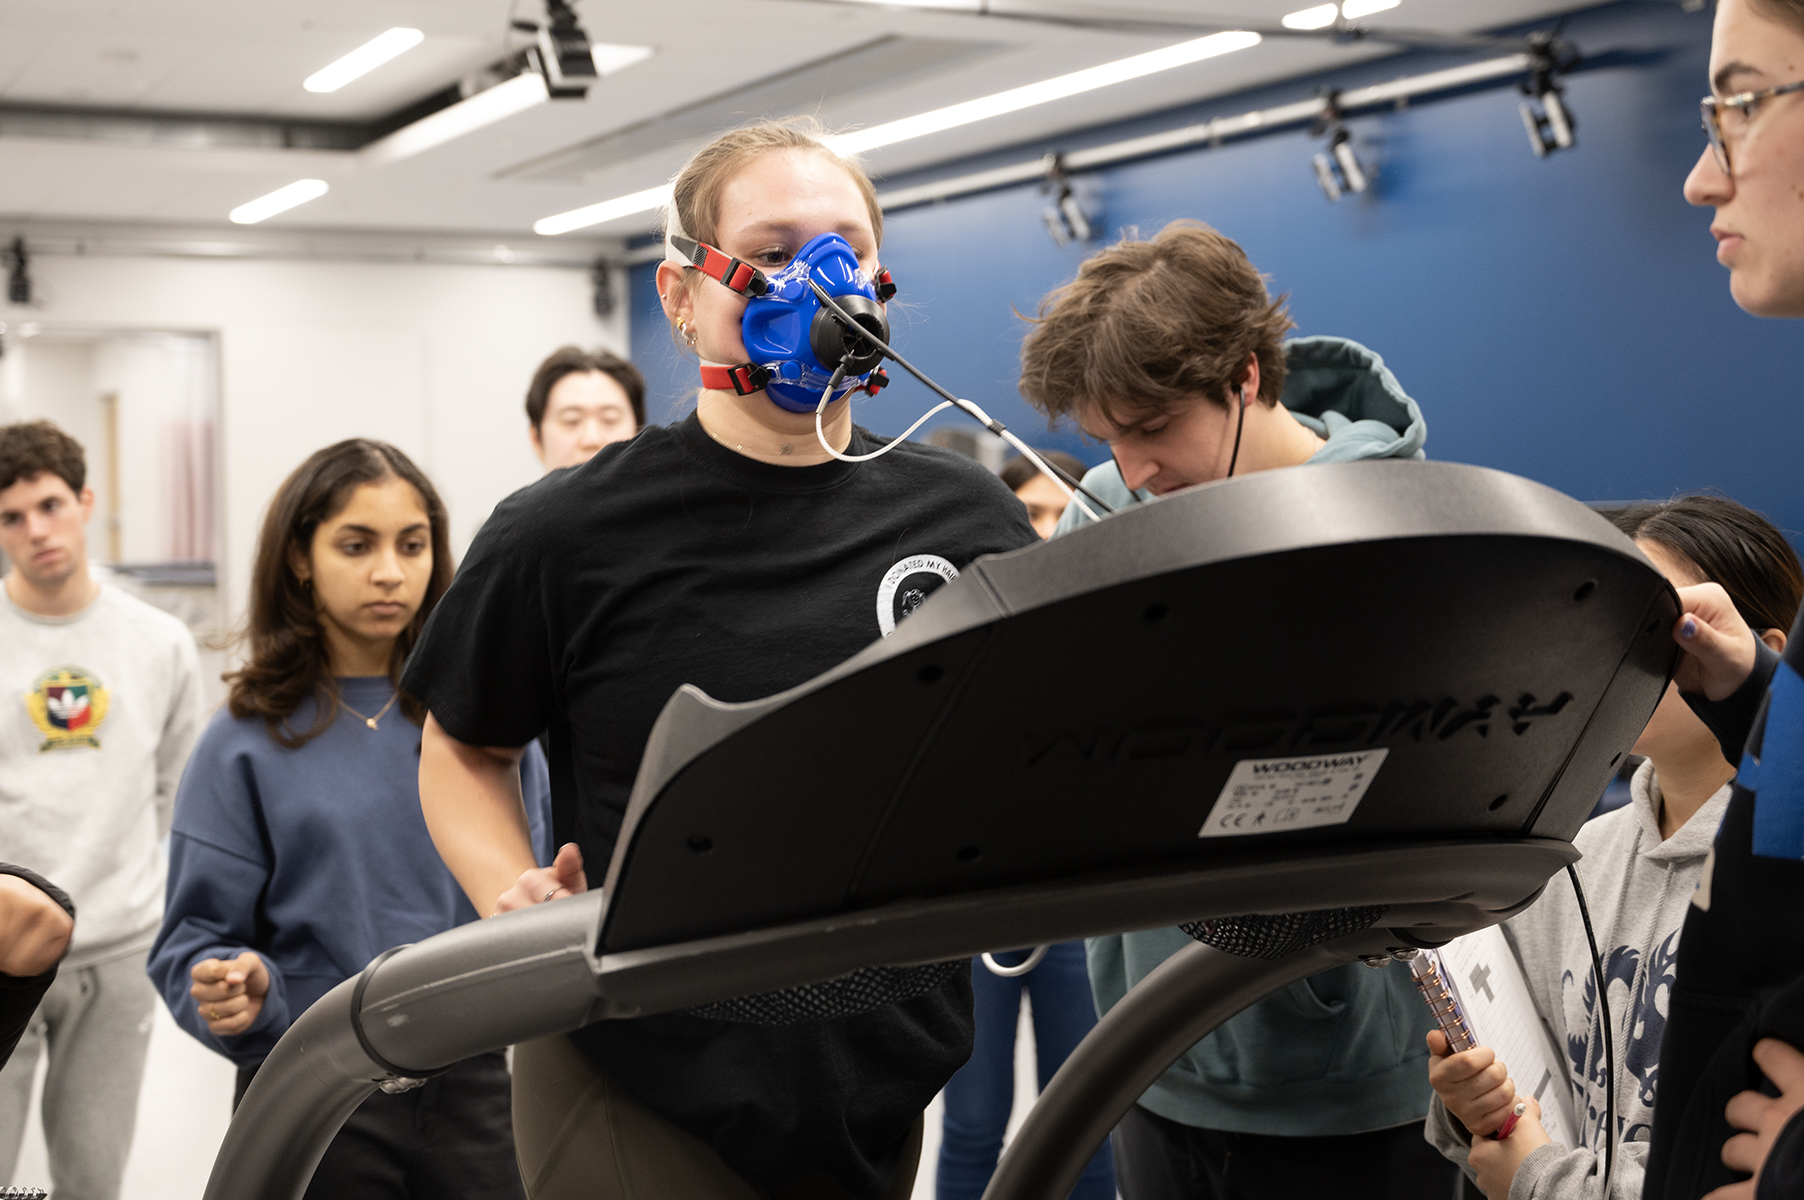 students observe student on treadmill